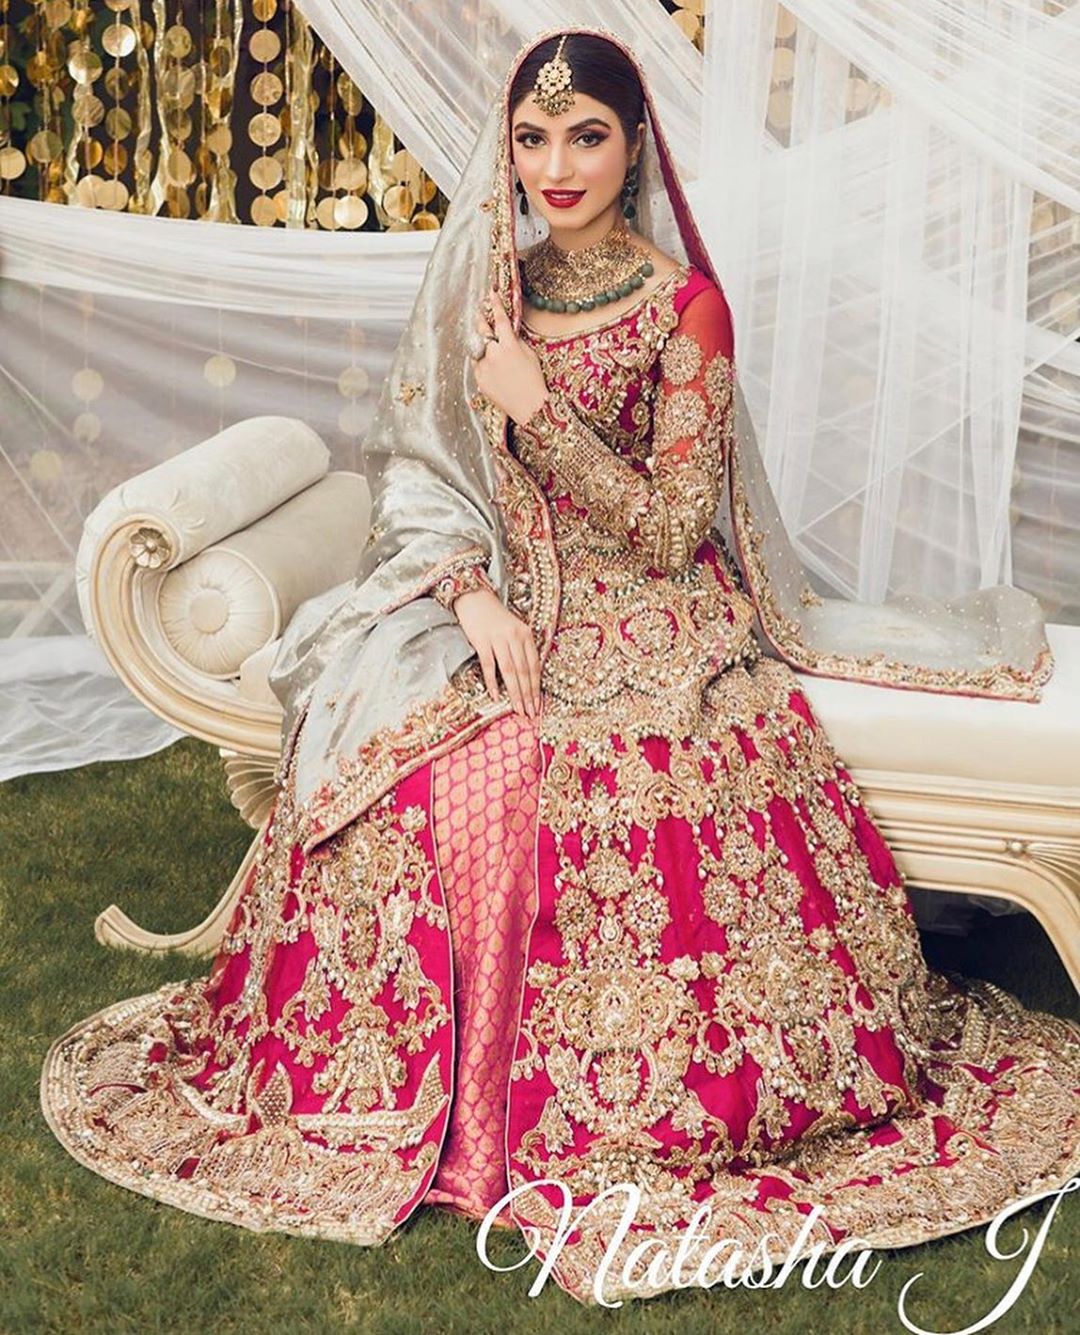 Awesome Bridal Photoshoot of Kinza Hashmi